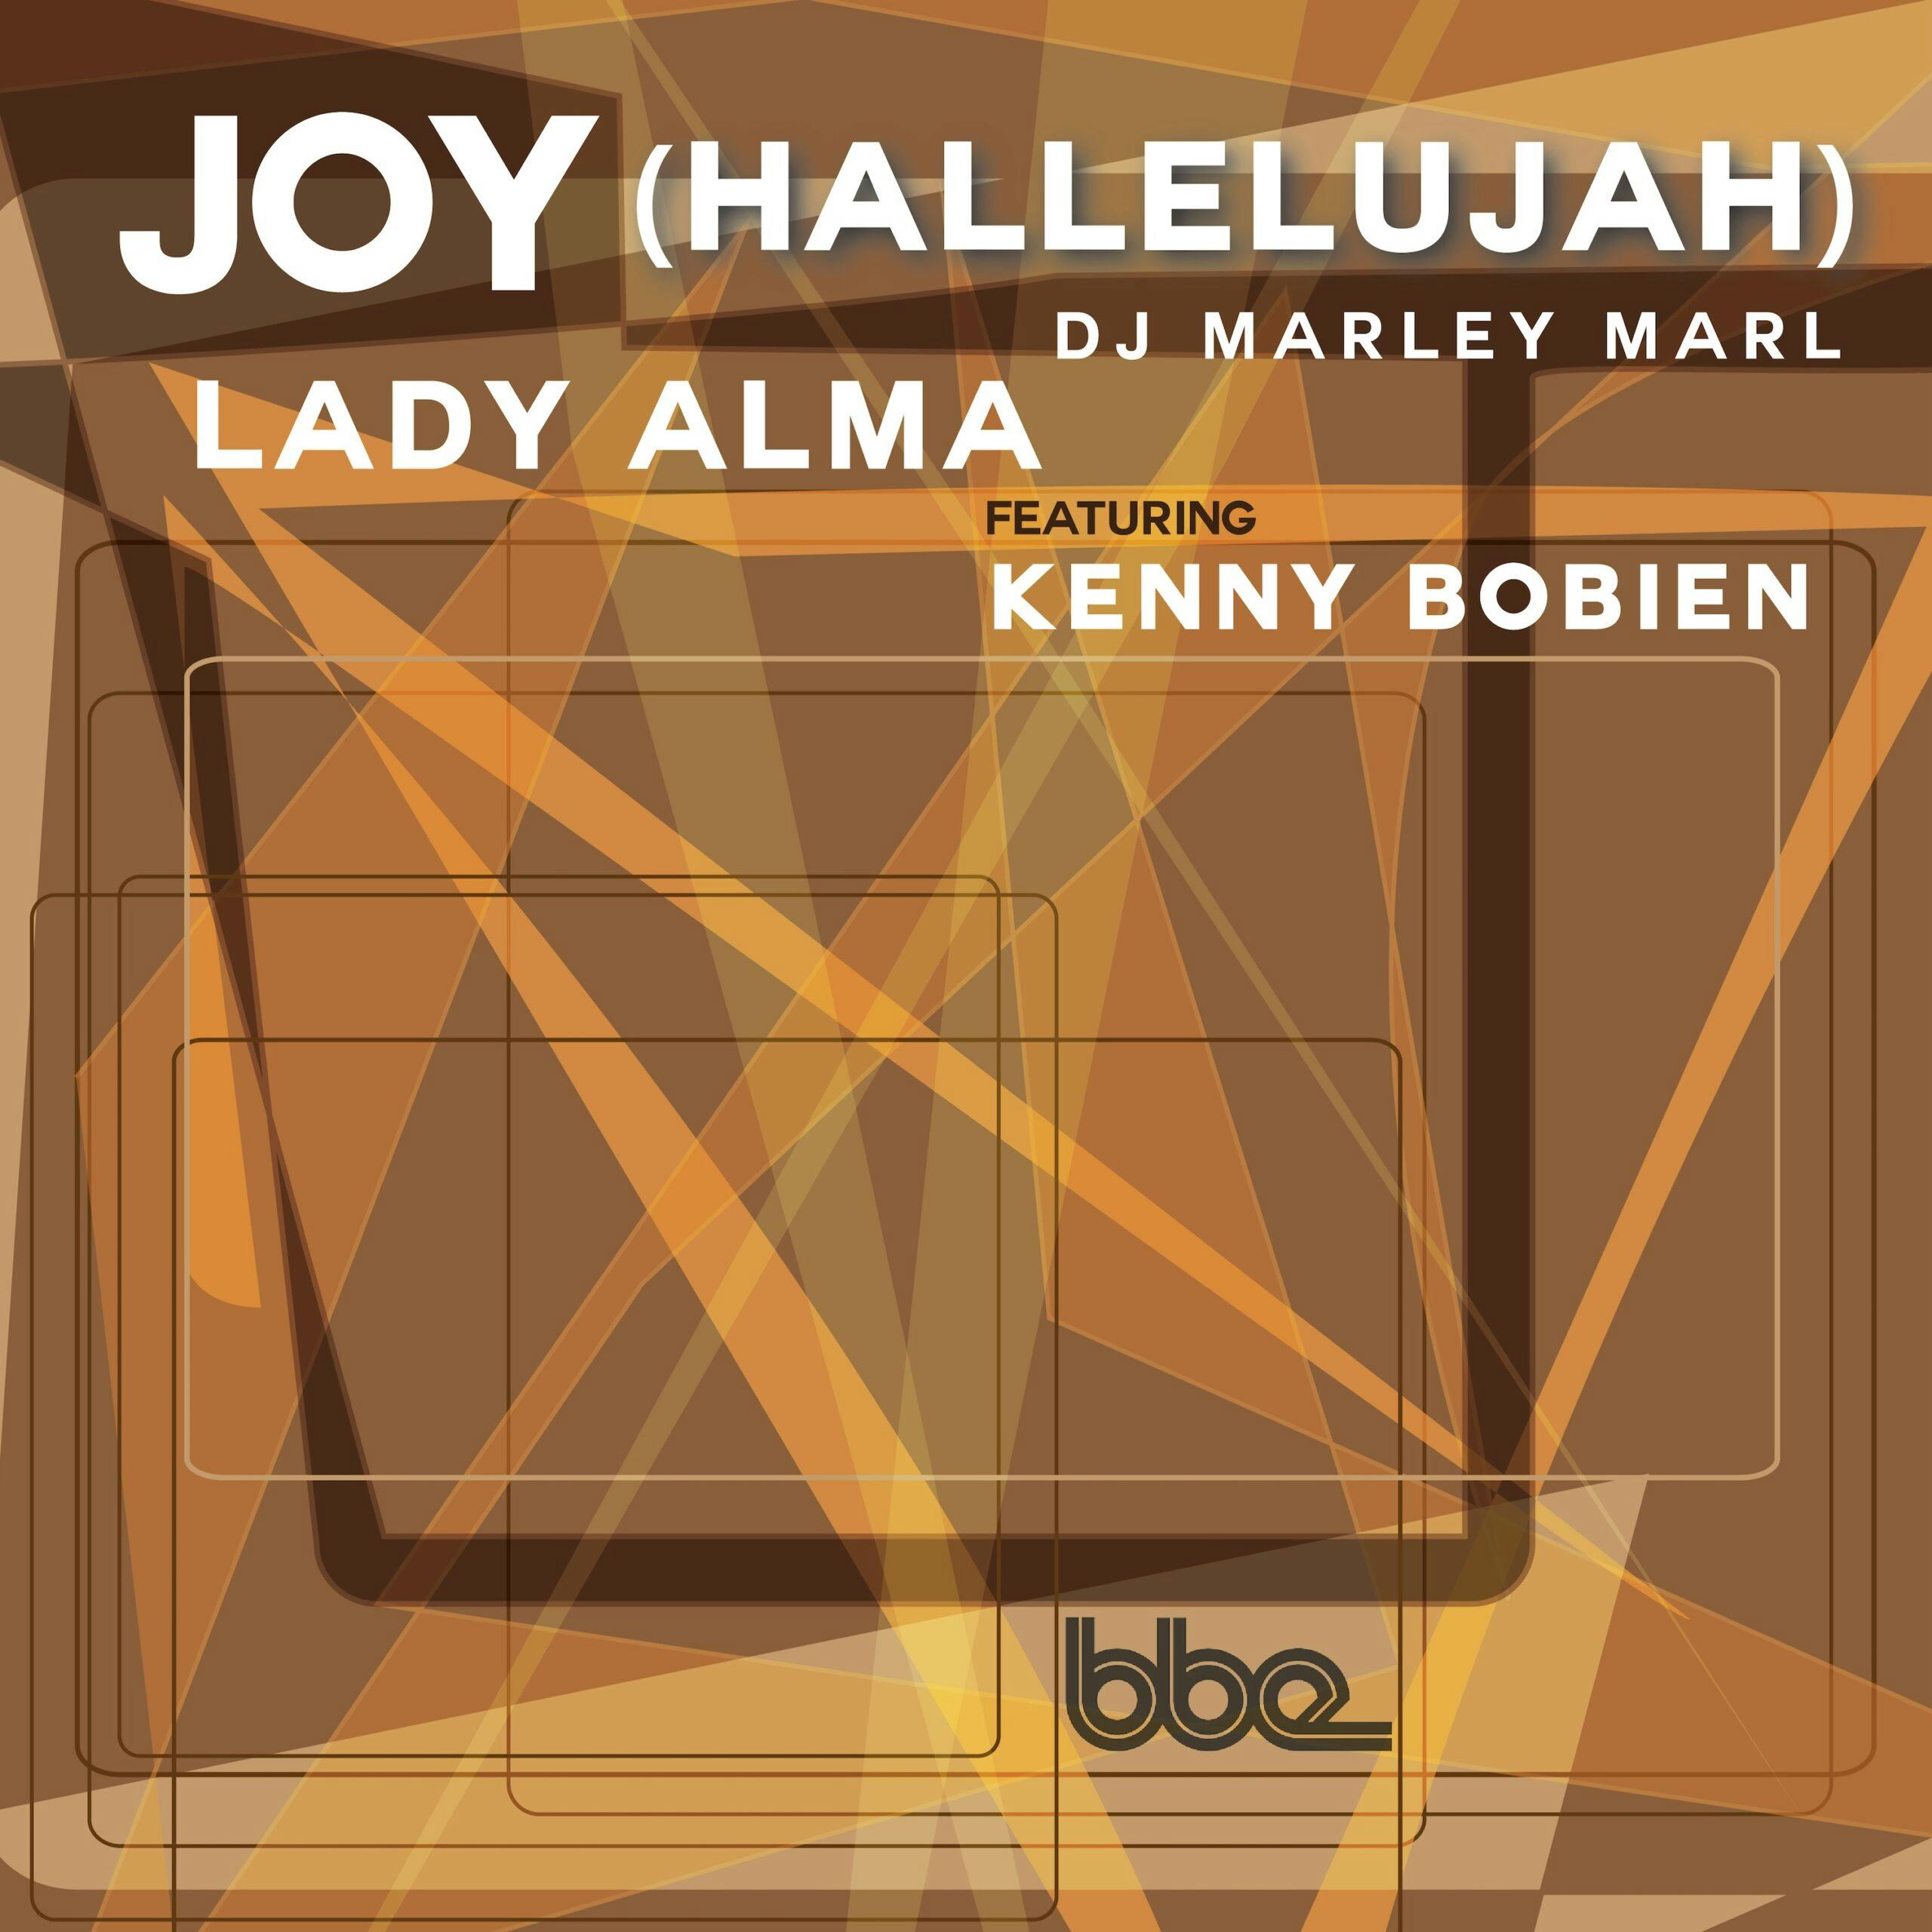 Joy (Hallelujah) (Feat. Lady Alma and Kenny Bobien) Joy (Hallelujah) (Feat. Lady Alma and Kenny Bobien)